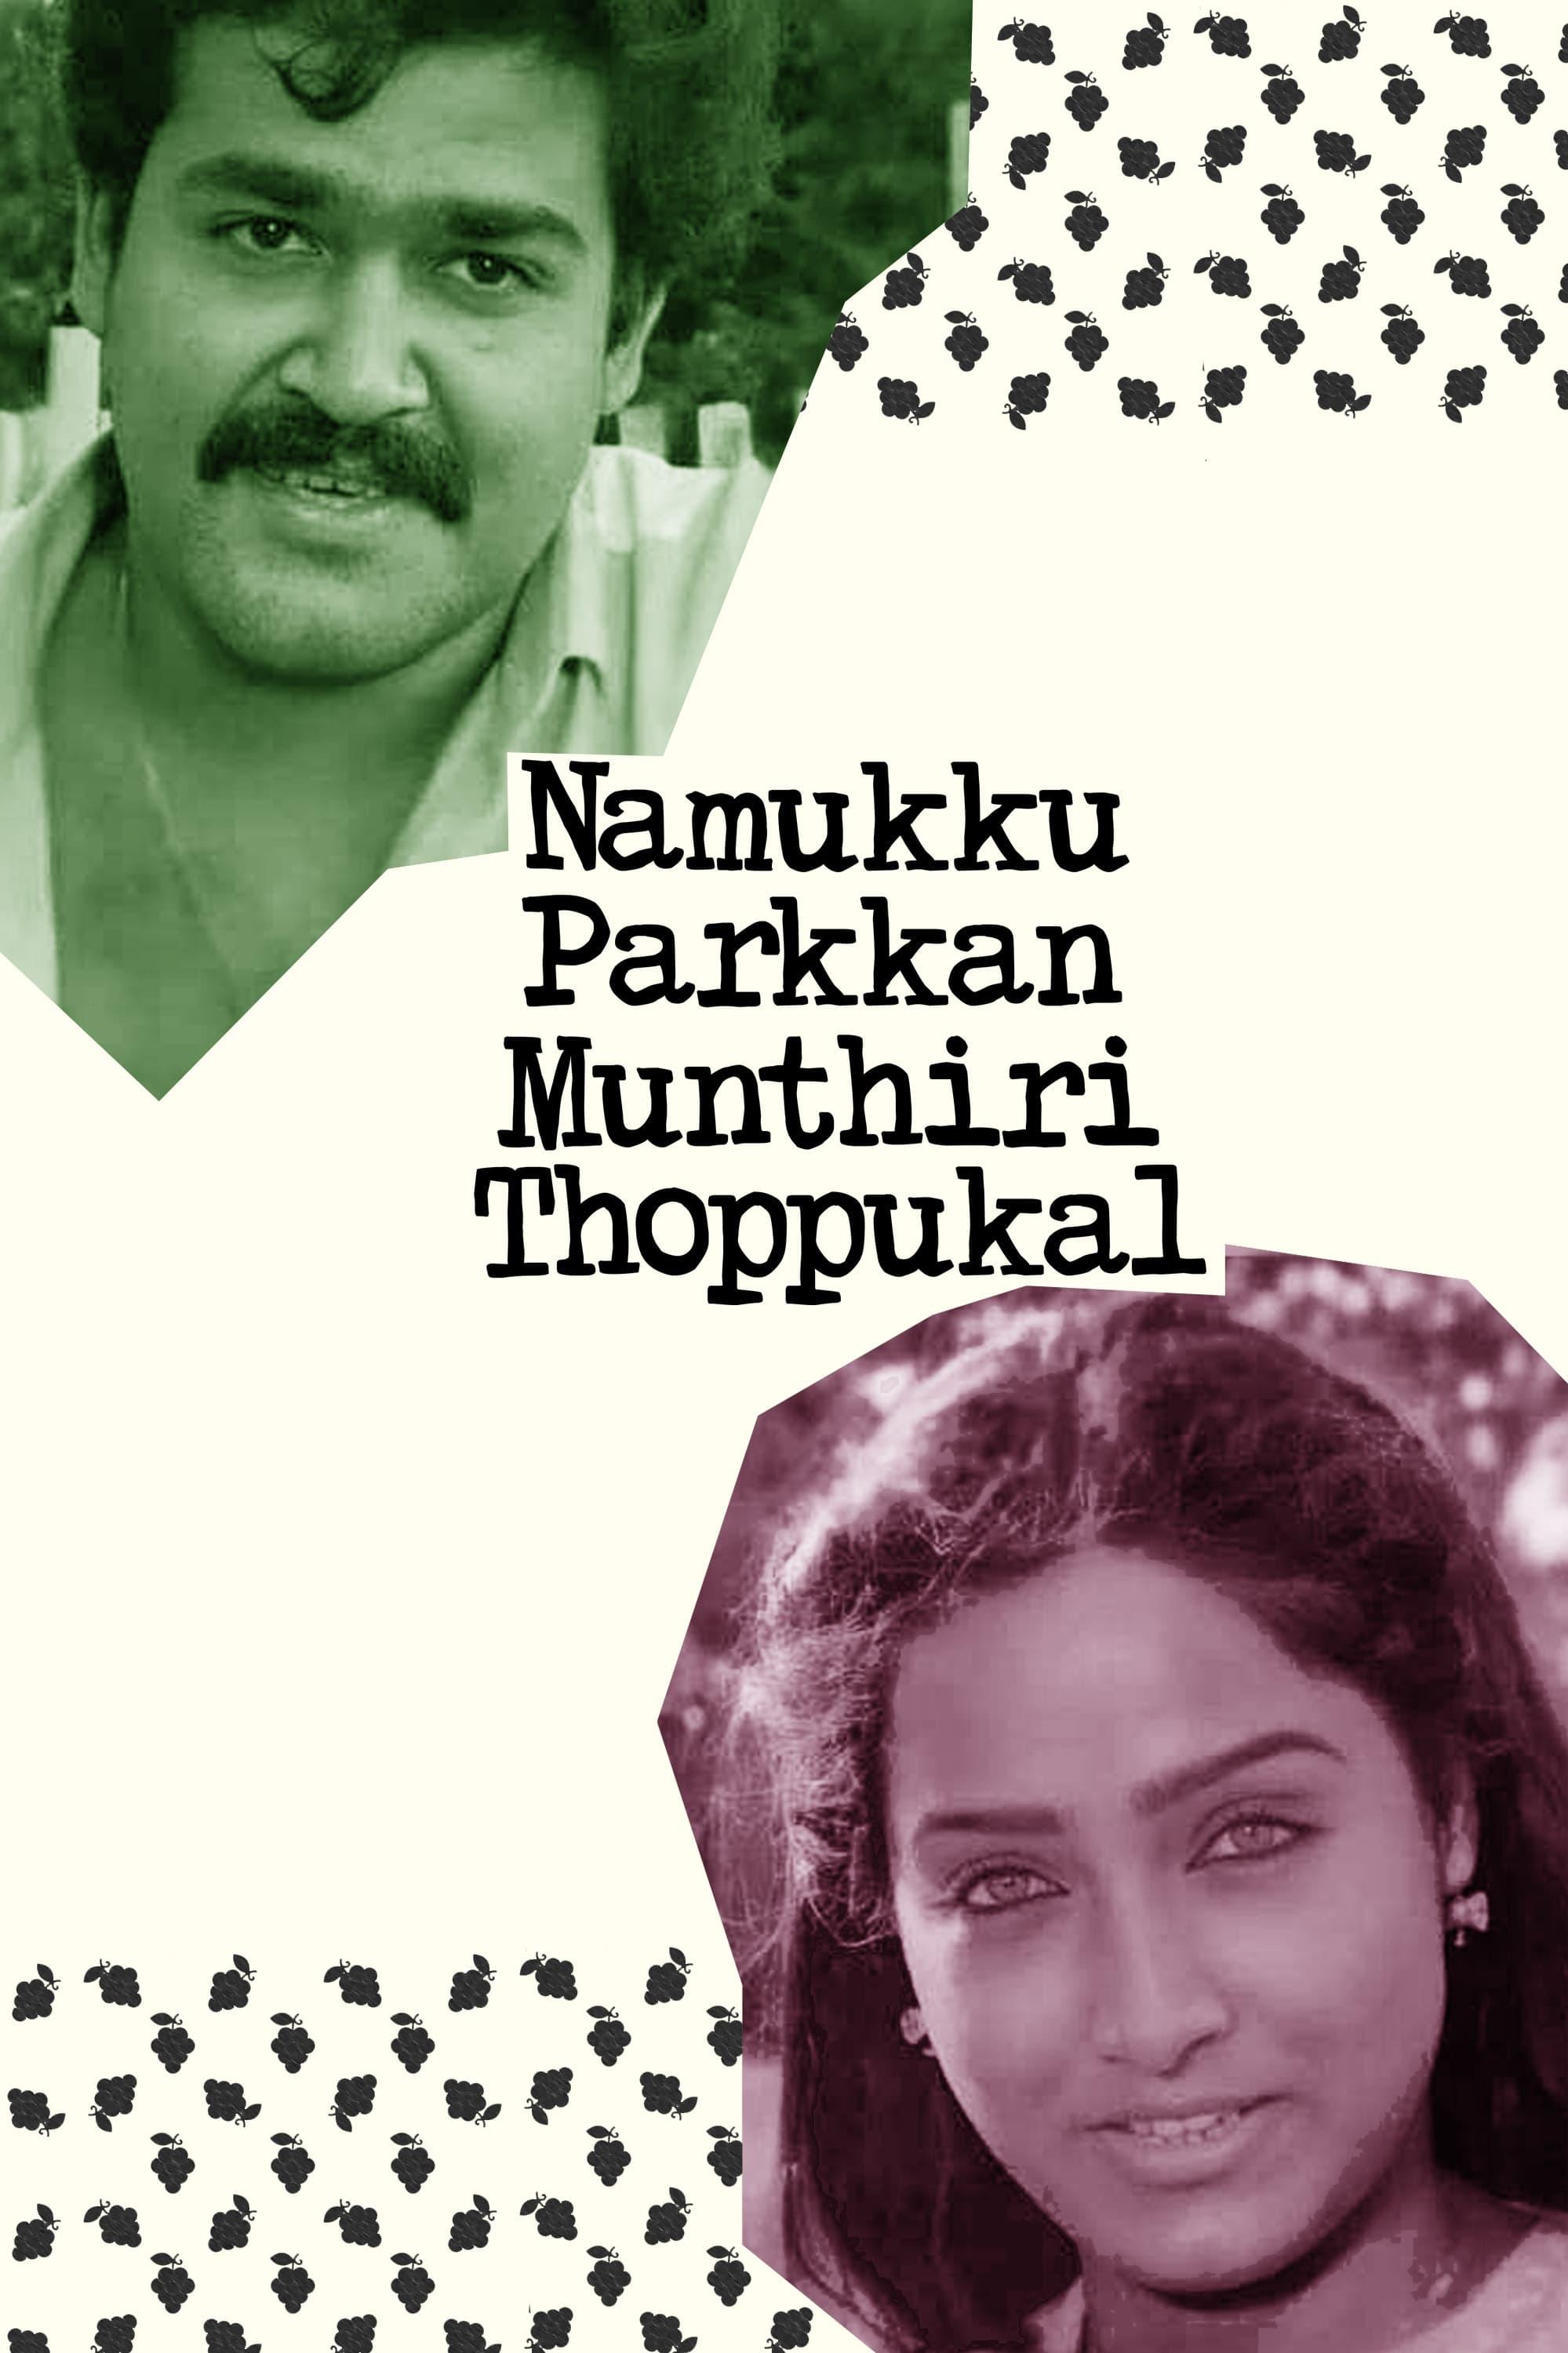 Namukku Parkkan Munthiri Thoppukal poster